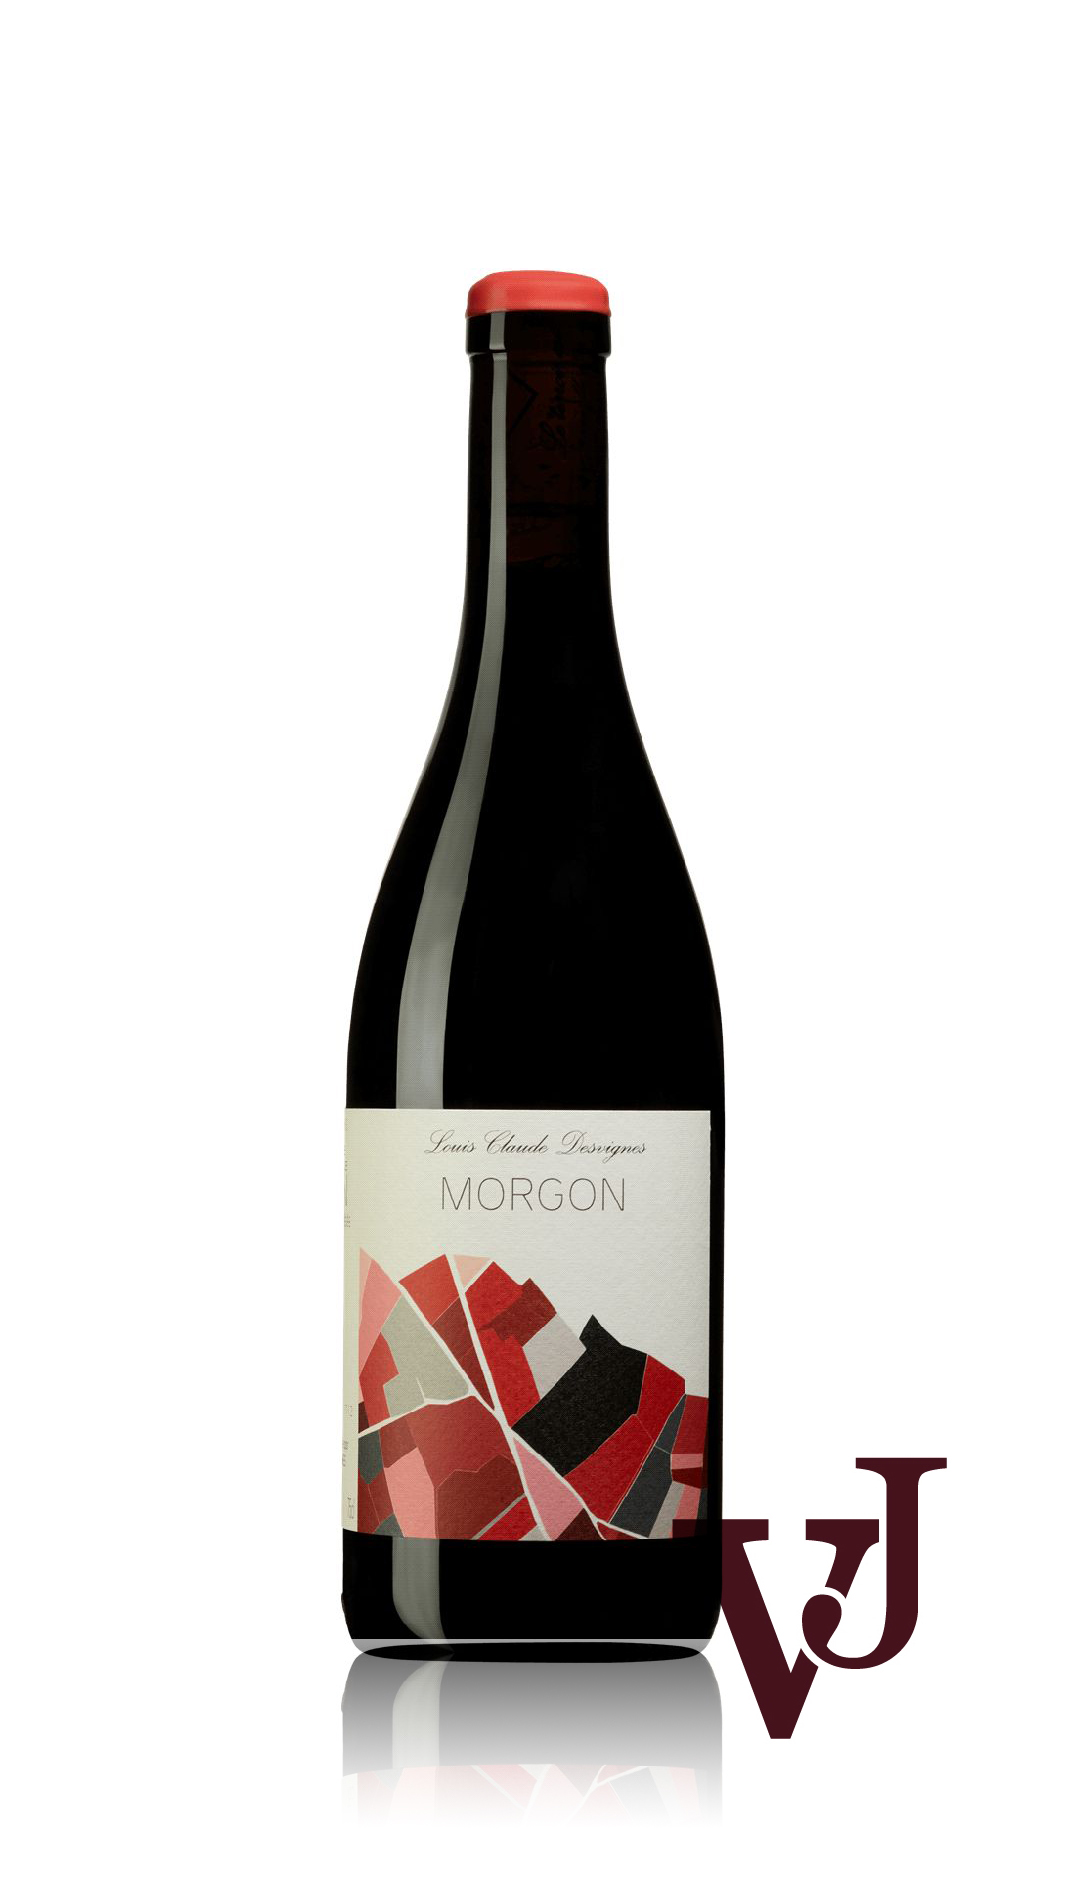 Rött Vin - Morgon Corcelette 2022 artikel nummer 9284701 från producenten Domaine Louis-Claude Desvignes från Frankrike - Vinjournalen.se